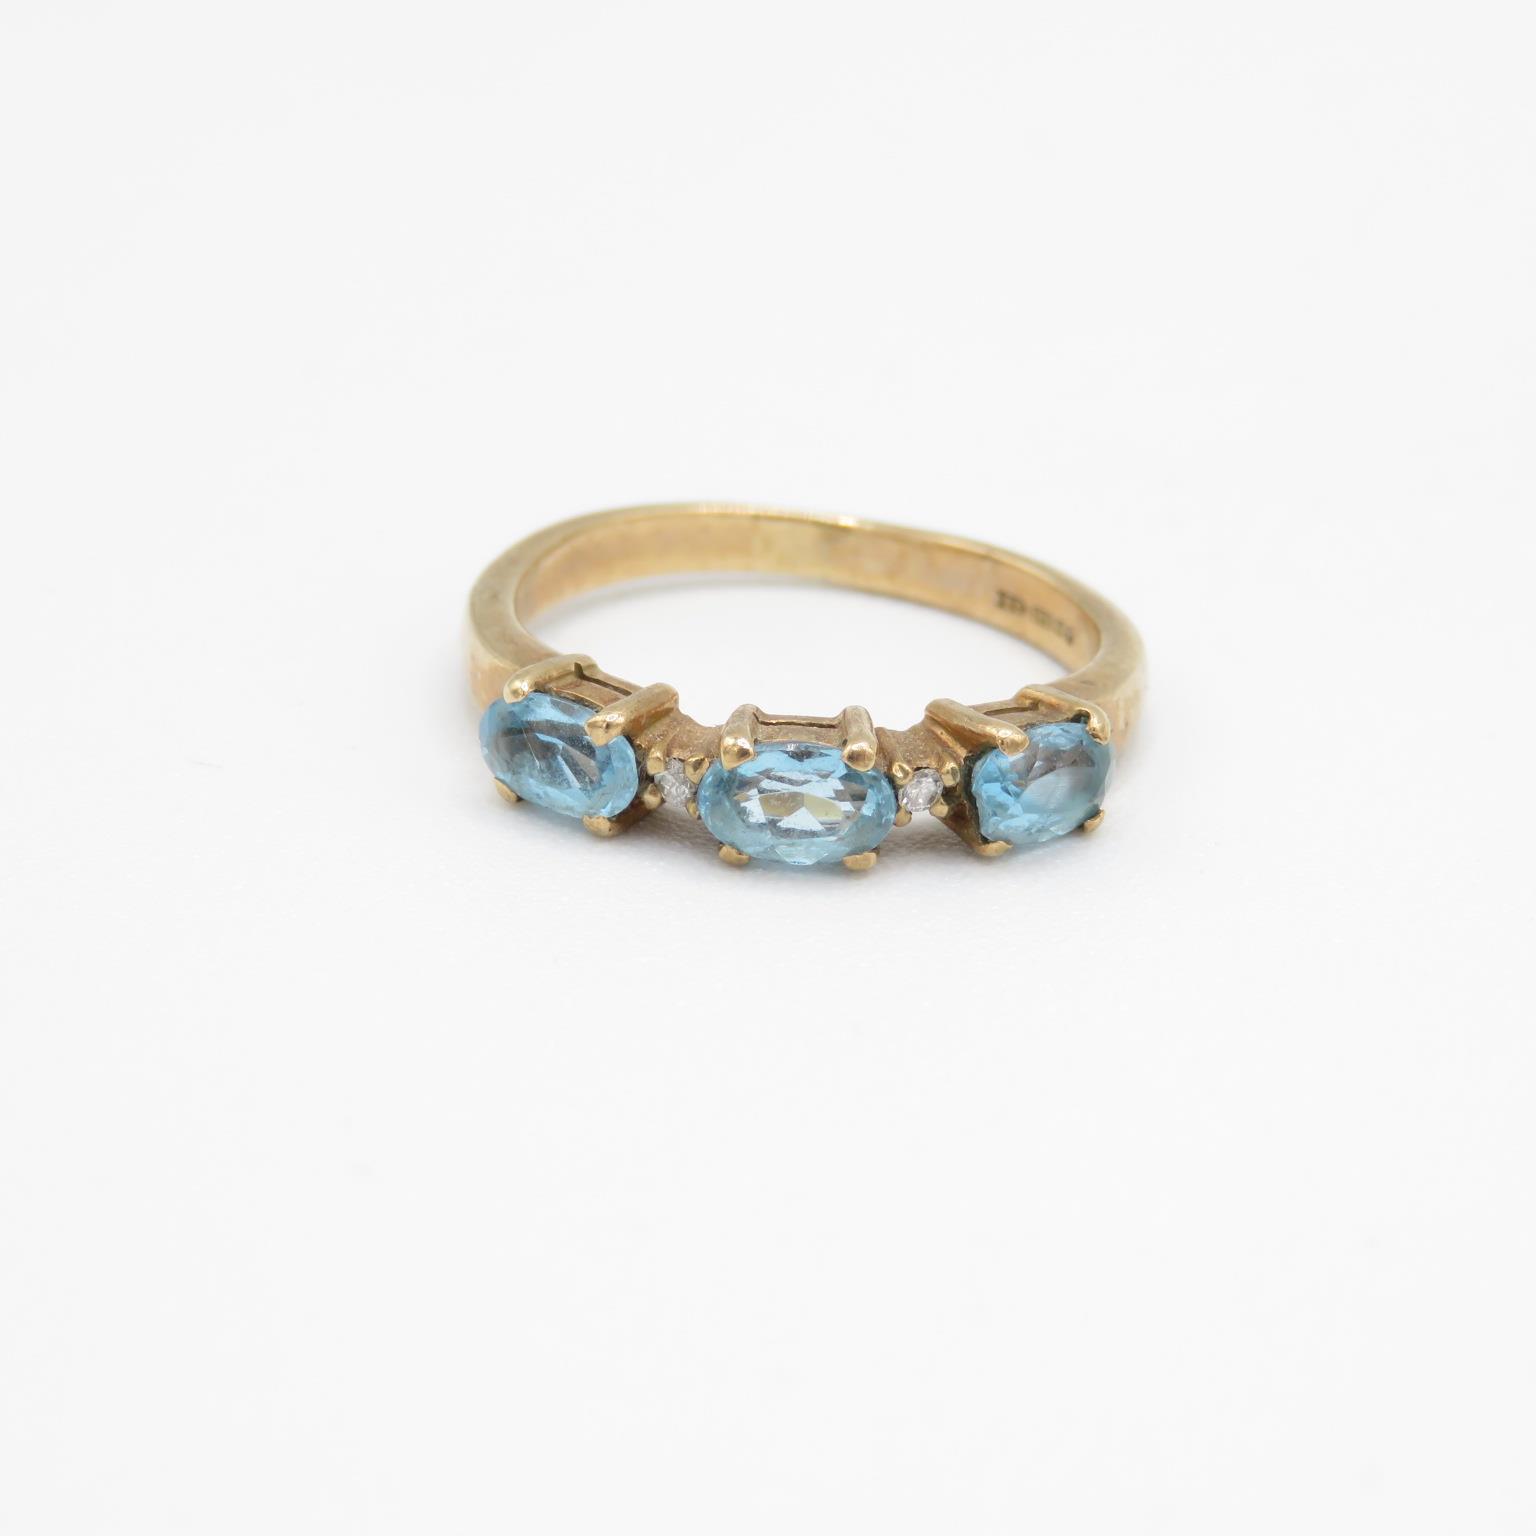 9ct gold blue topaz and diamond set band dress ring Size H 1/2 - 2 g